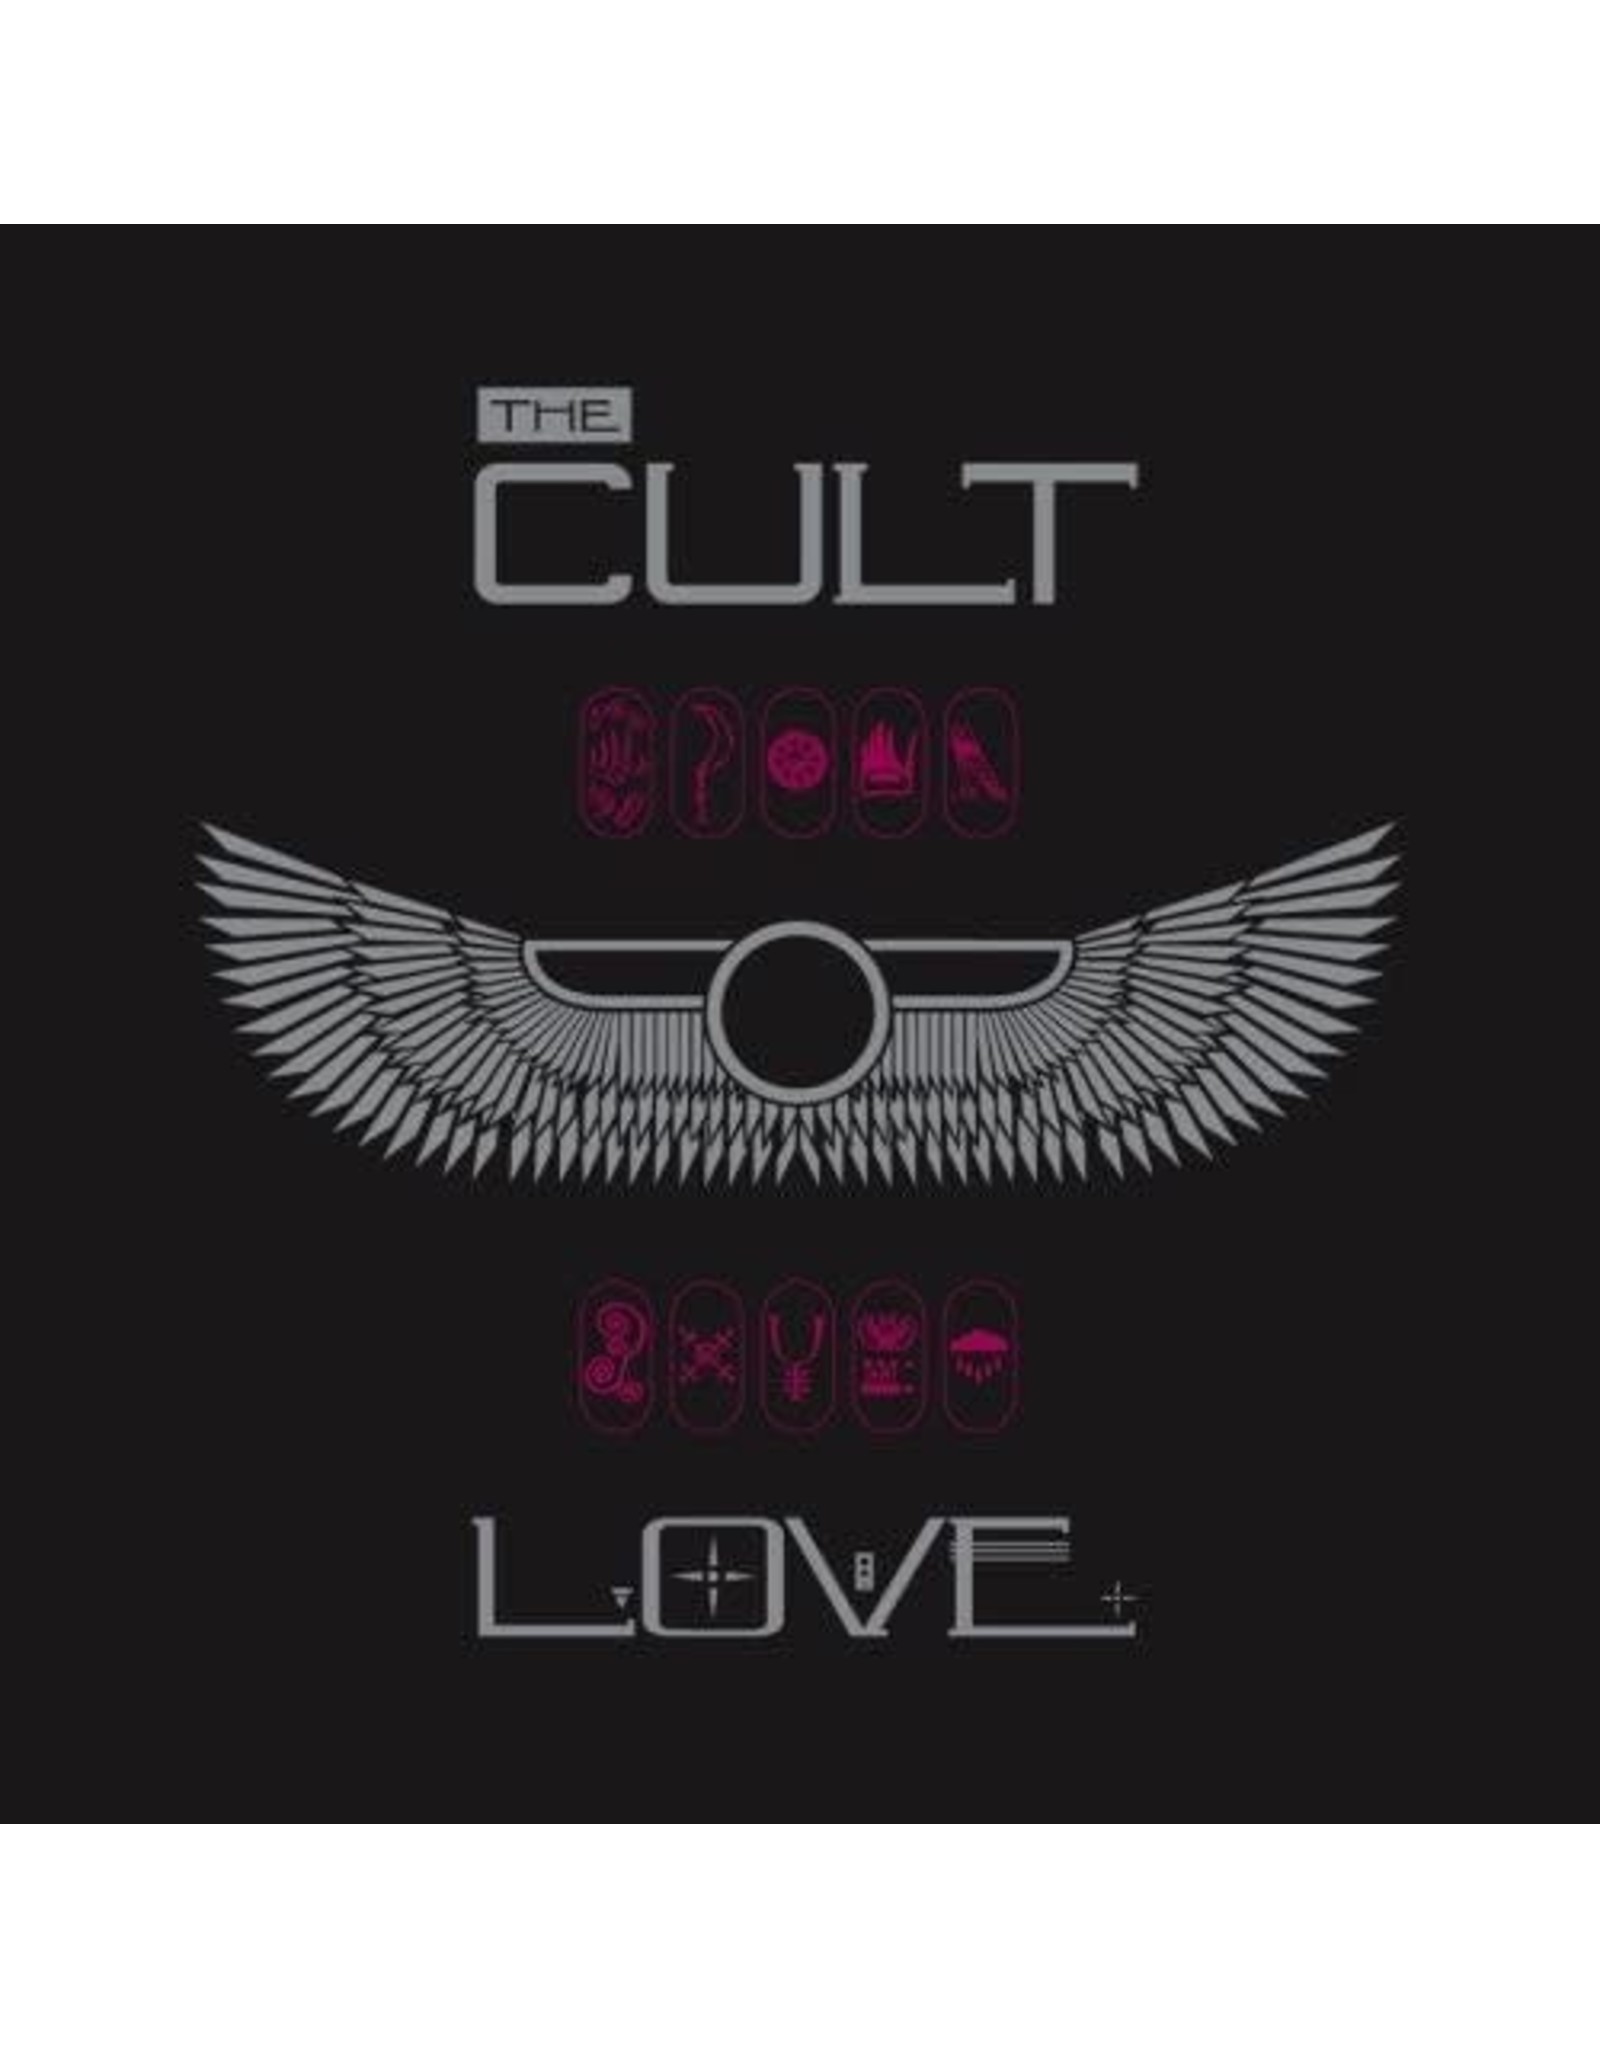 Cult - Love (Exclusive Red Vinyl)